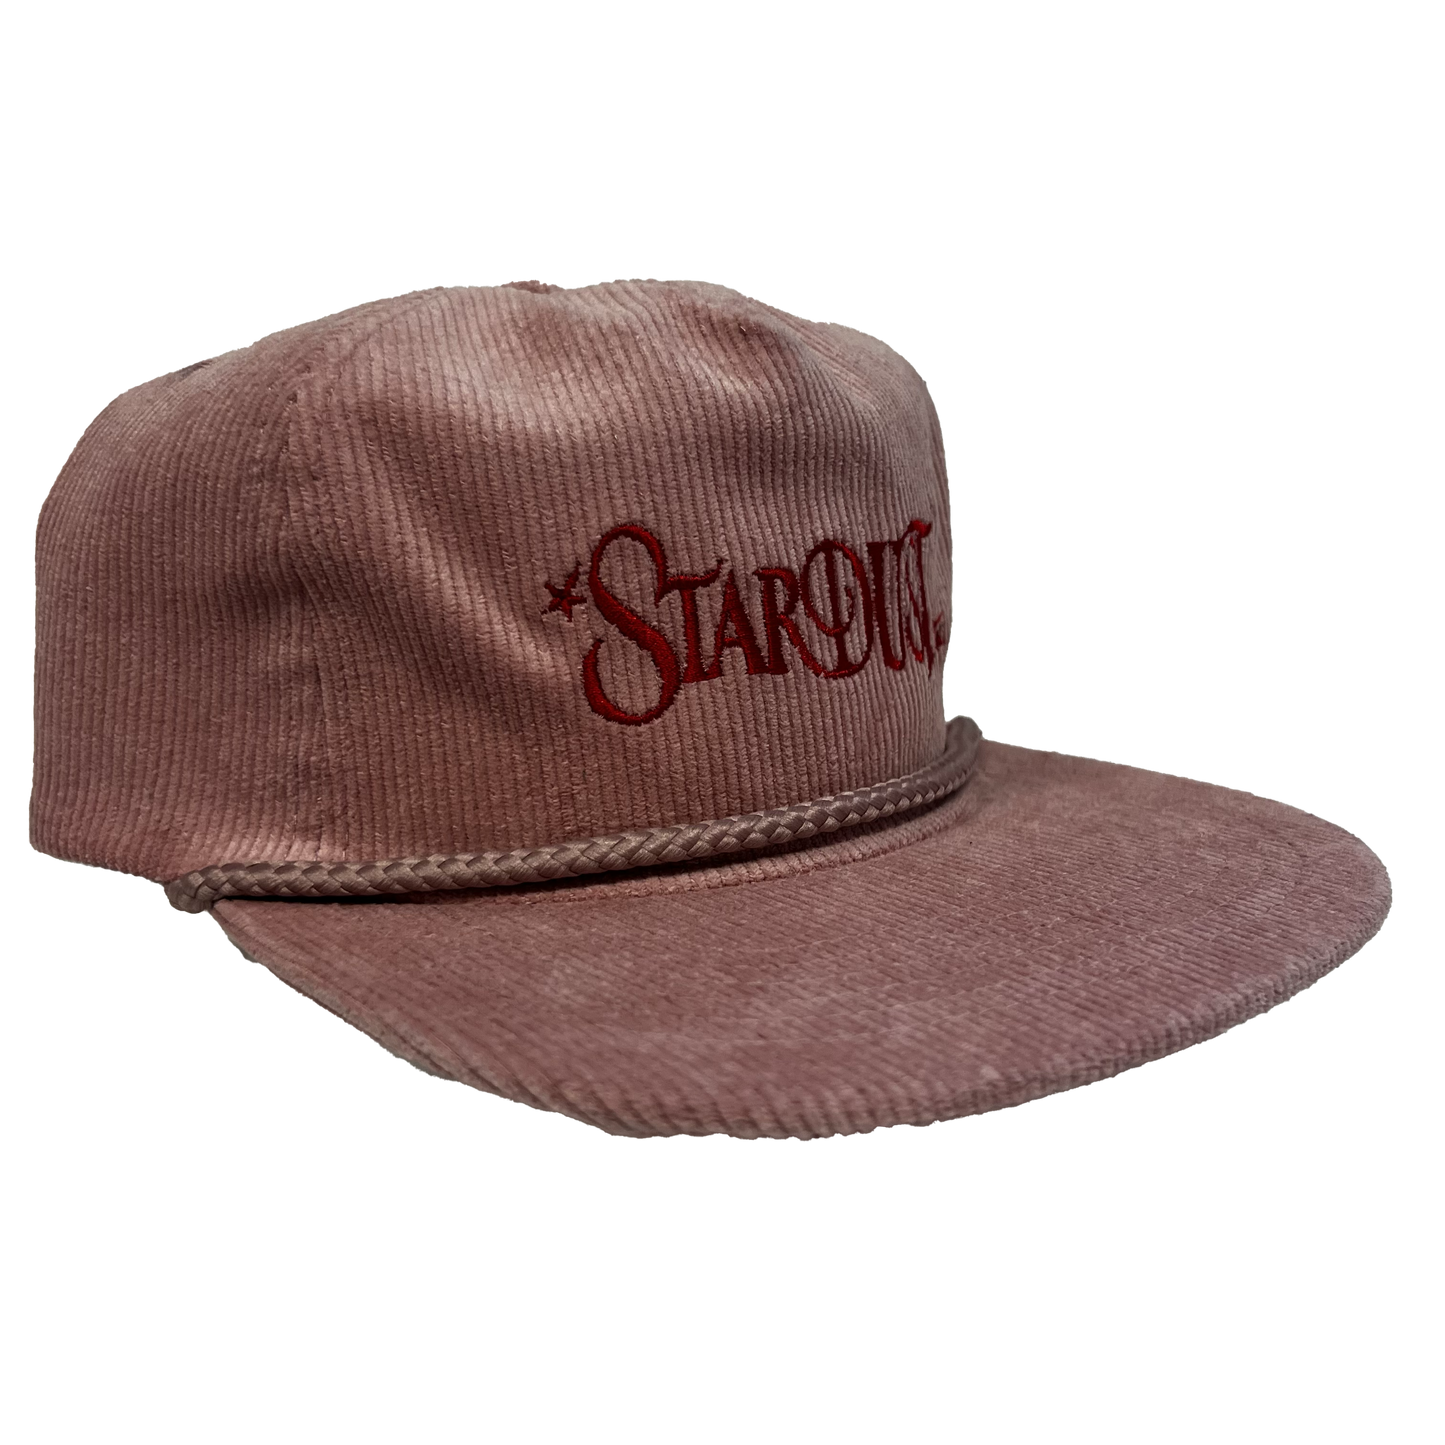 Stardust Wanderlust II Corduroy Snapback Hat 004 Soft Pink / Red